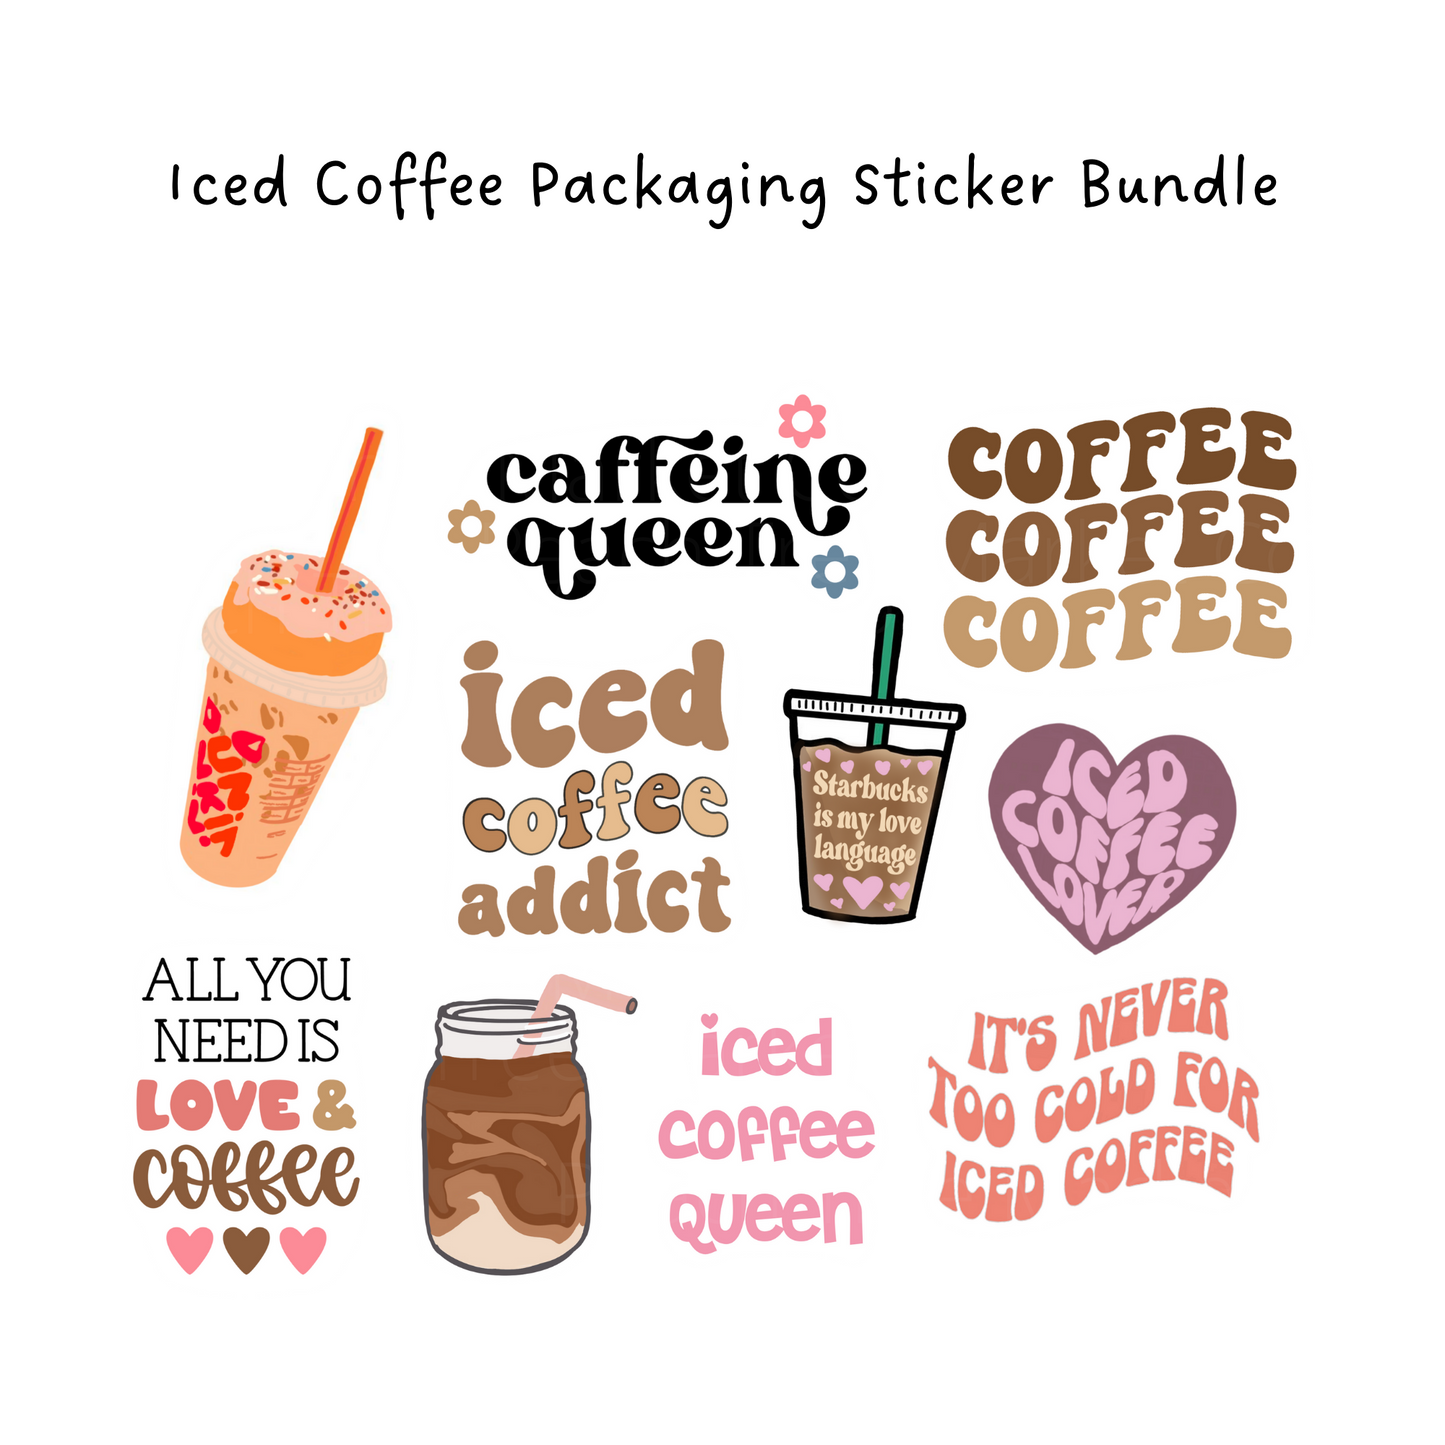 Iced Coffee Bundle Packaging Sticker